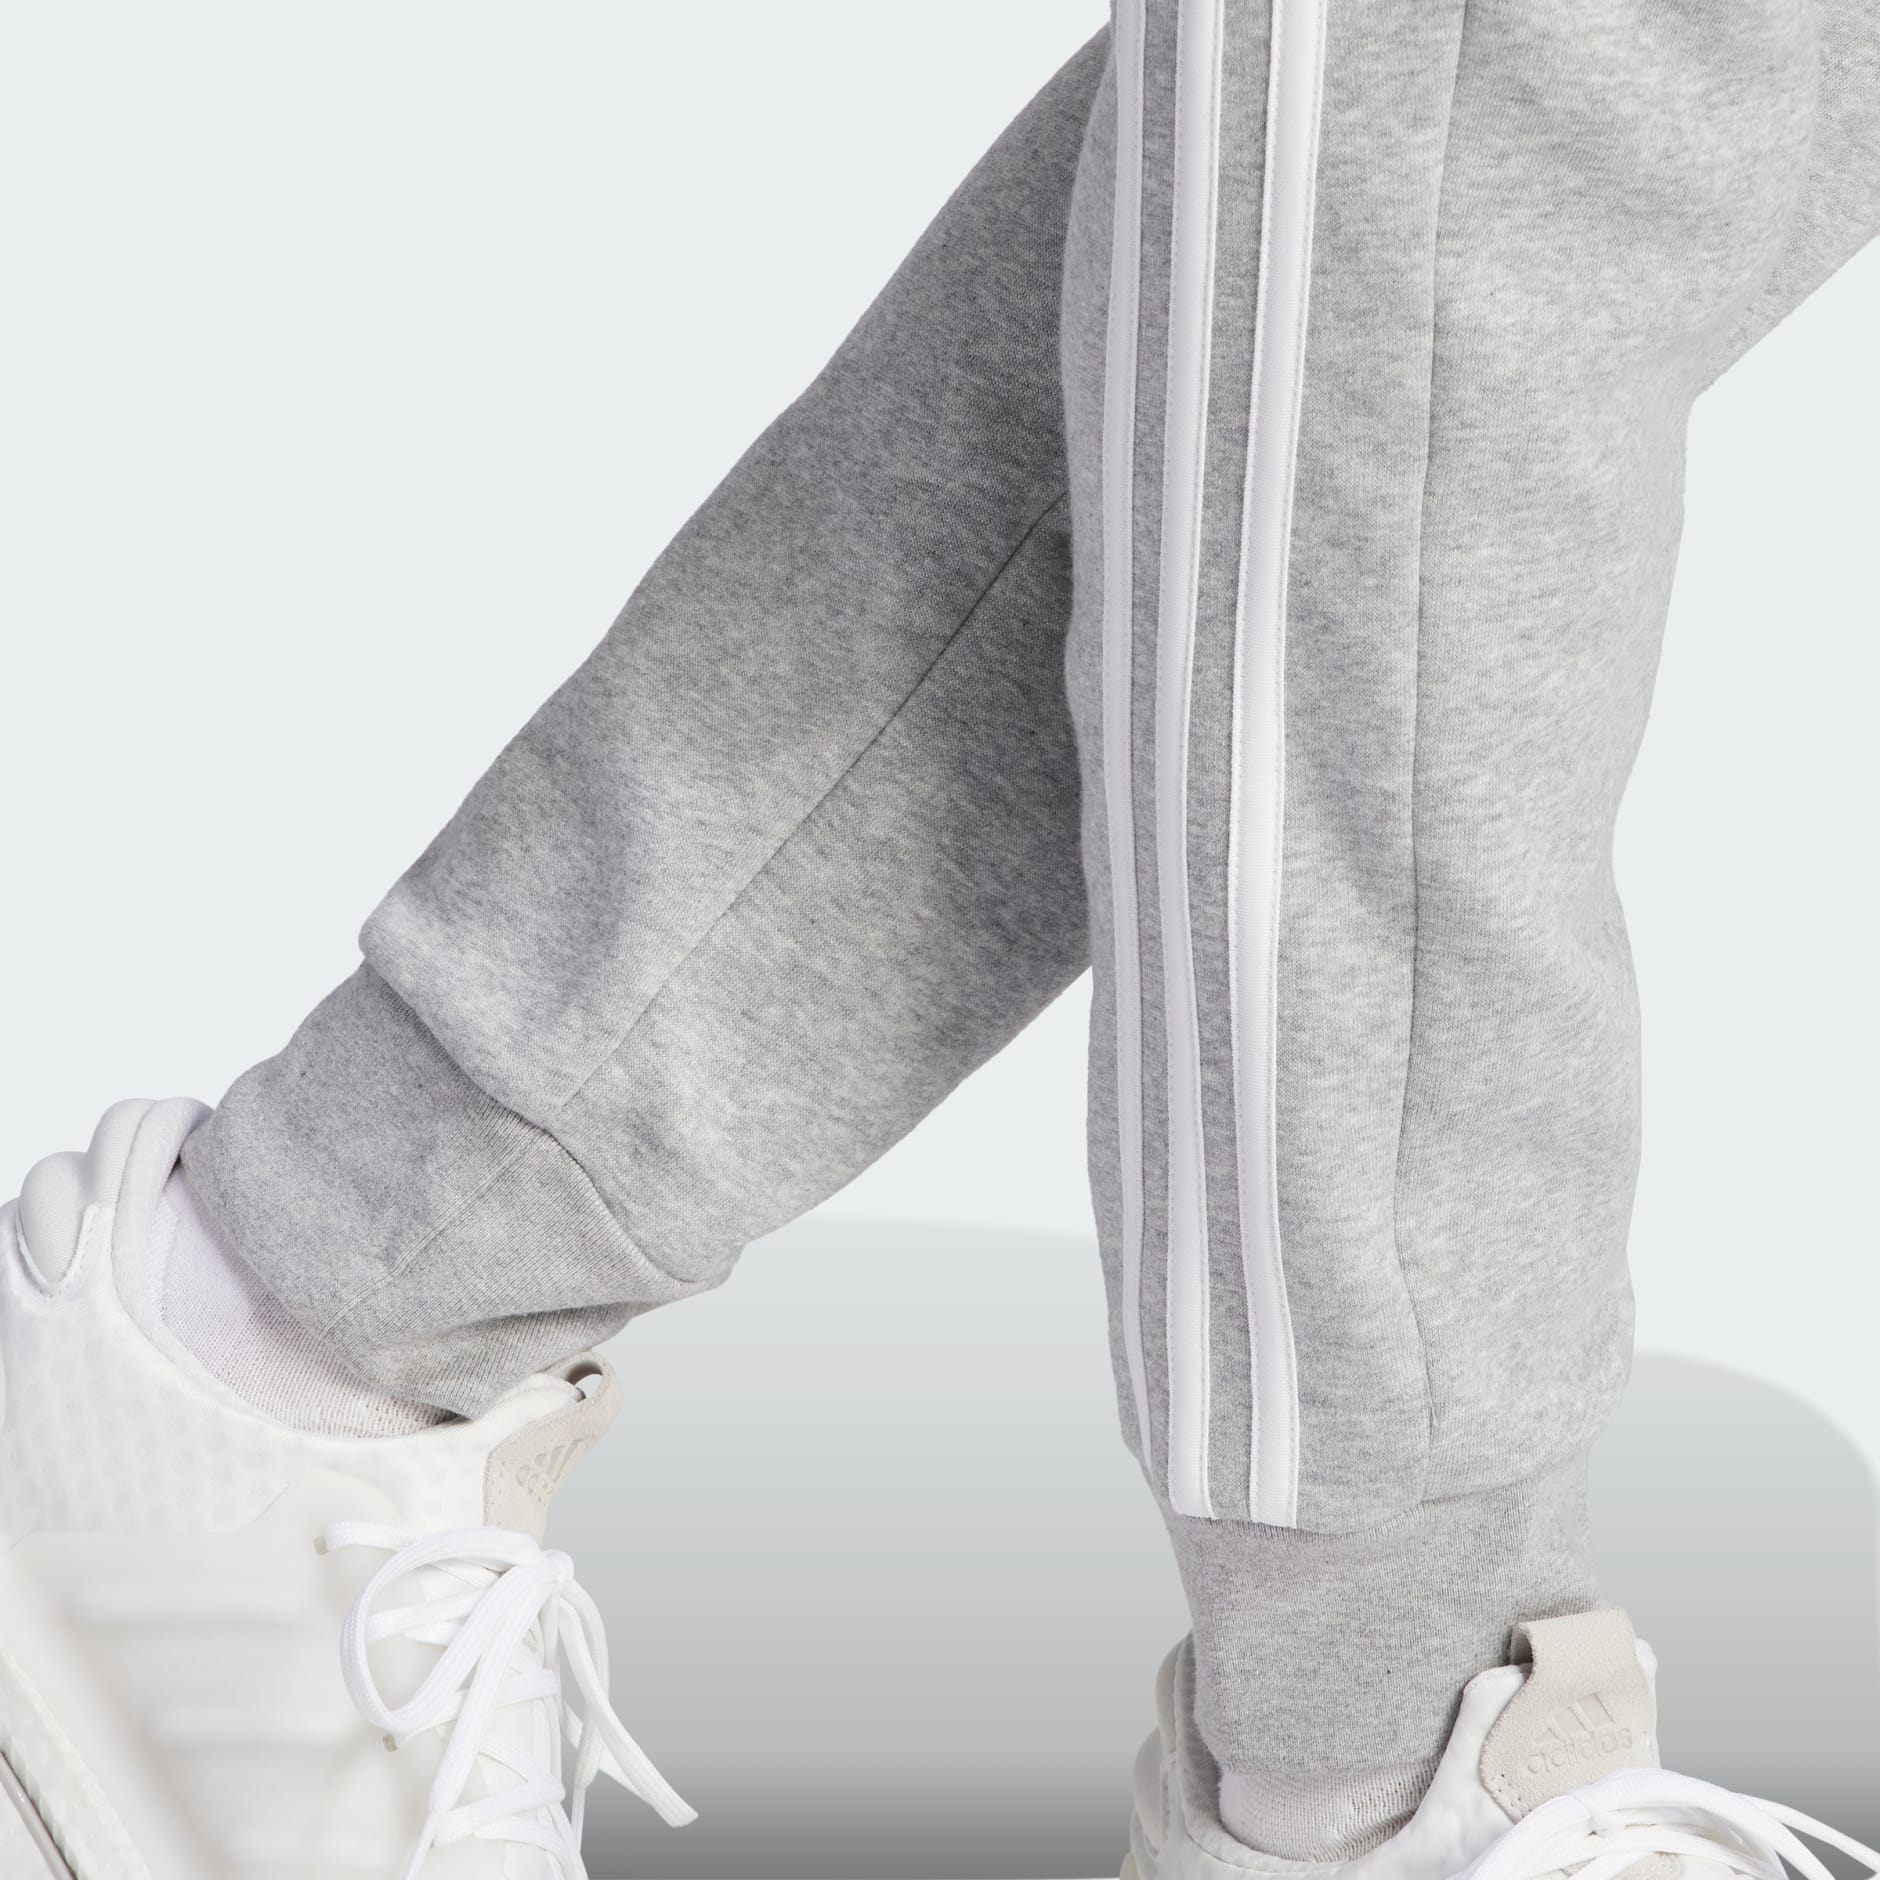 TZ Fleece Pants Grey Cuff adidas - Essentials 3-Stripes adidas Tapered |